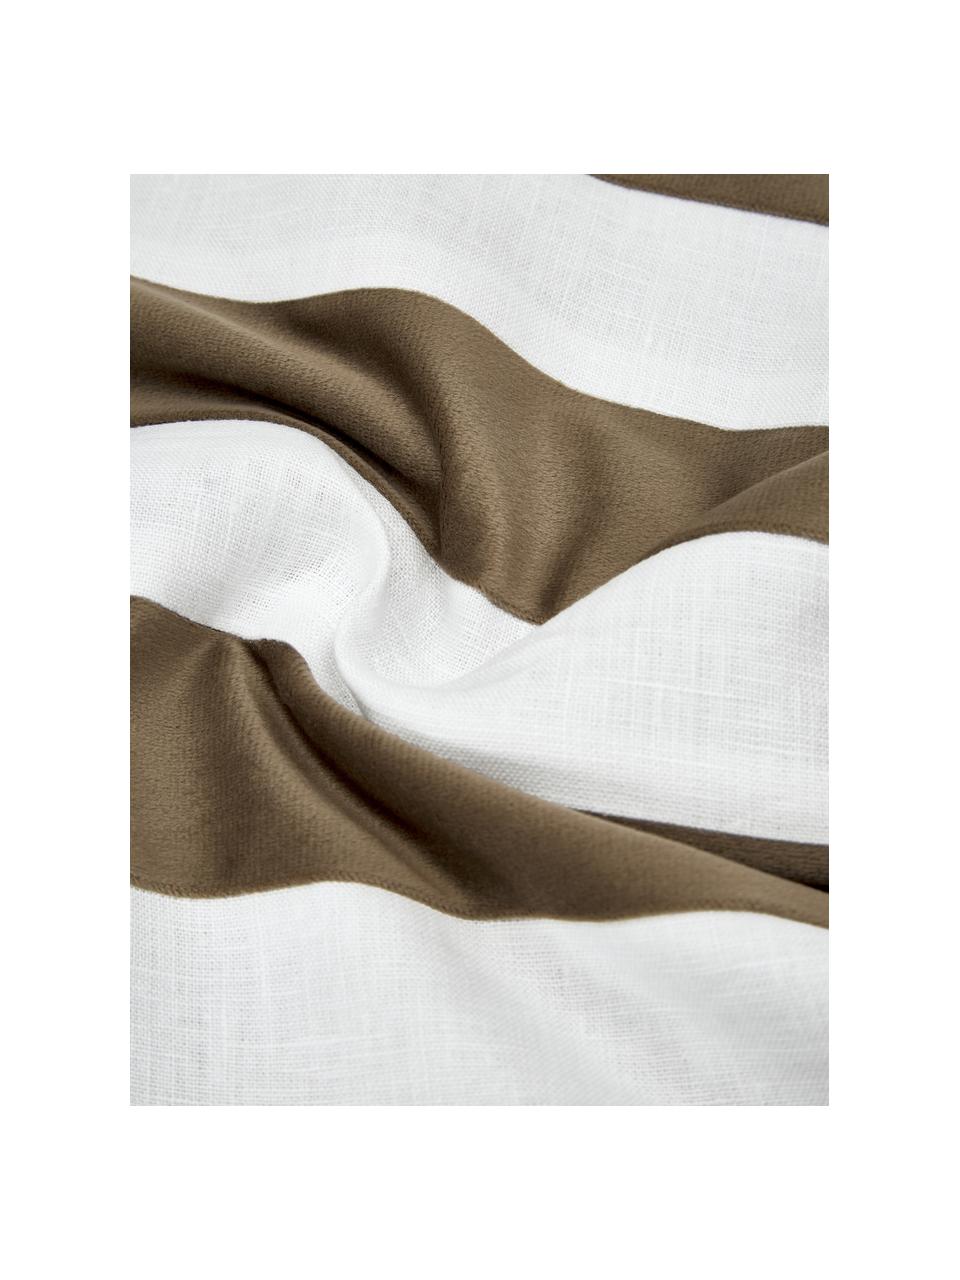 Kussenhoes Maui van een fluweel-linnen mix in taupe/wit, Taupe, wit, B 45 x L 45 cm